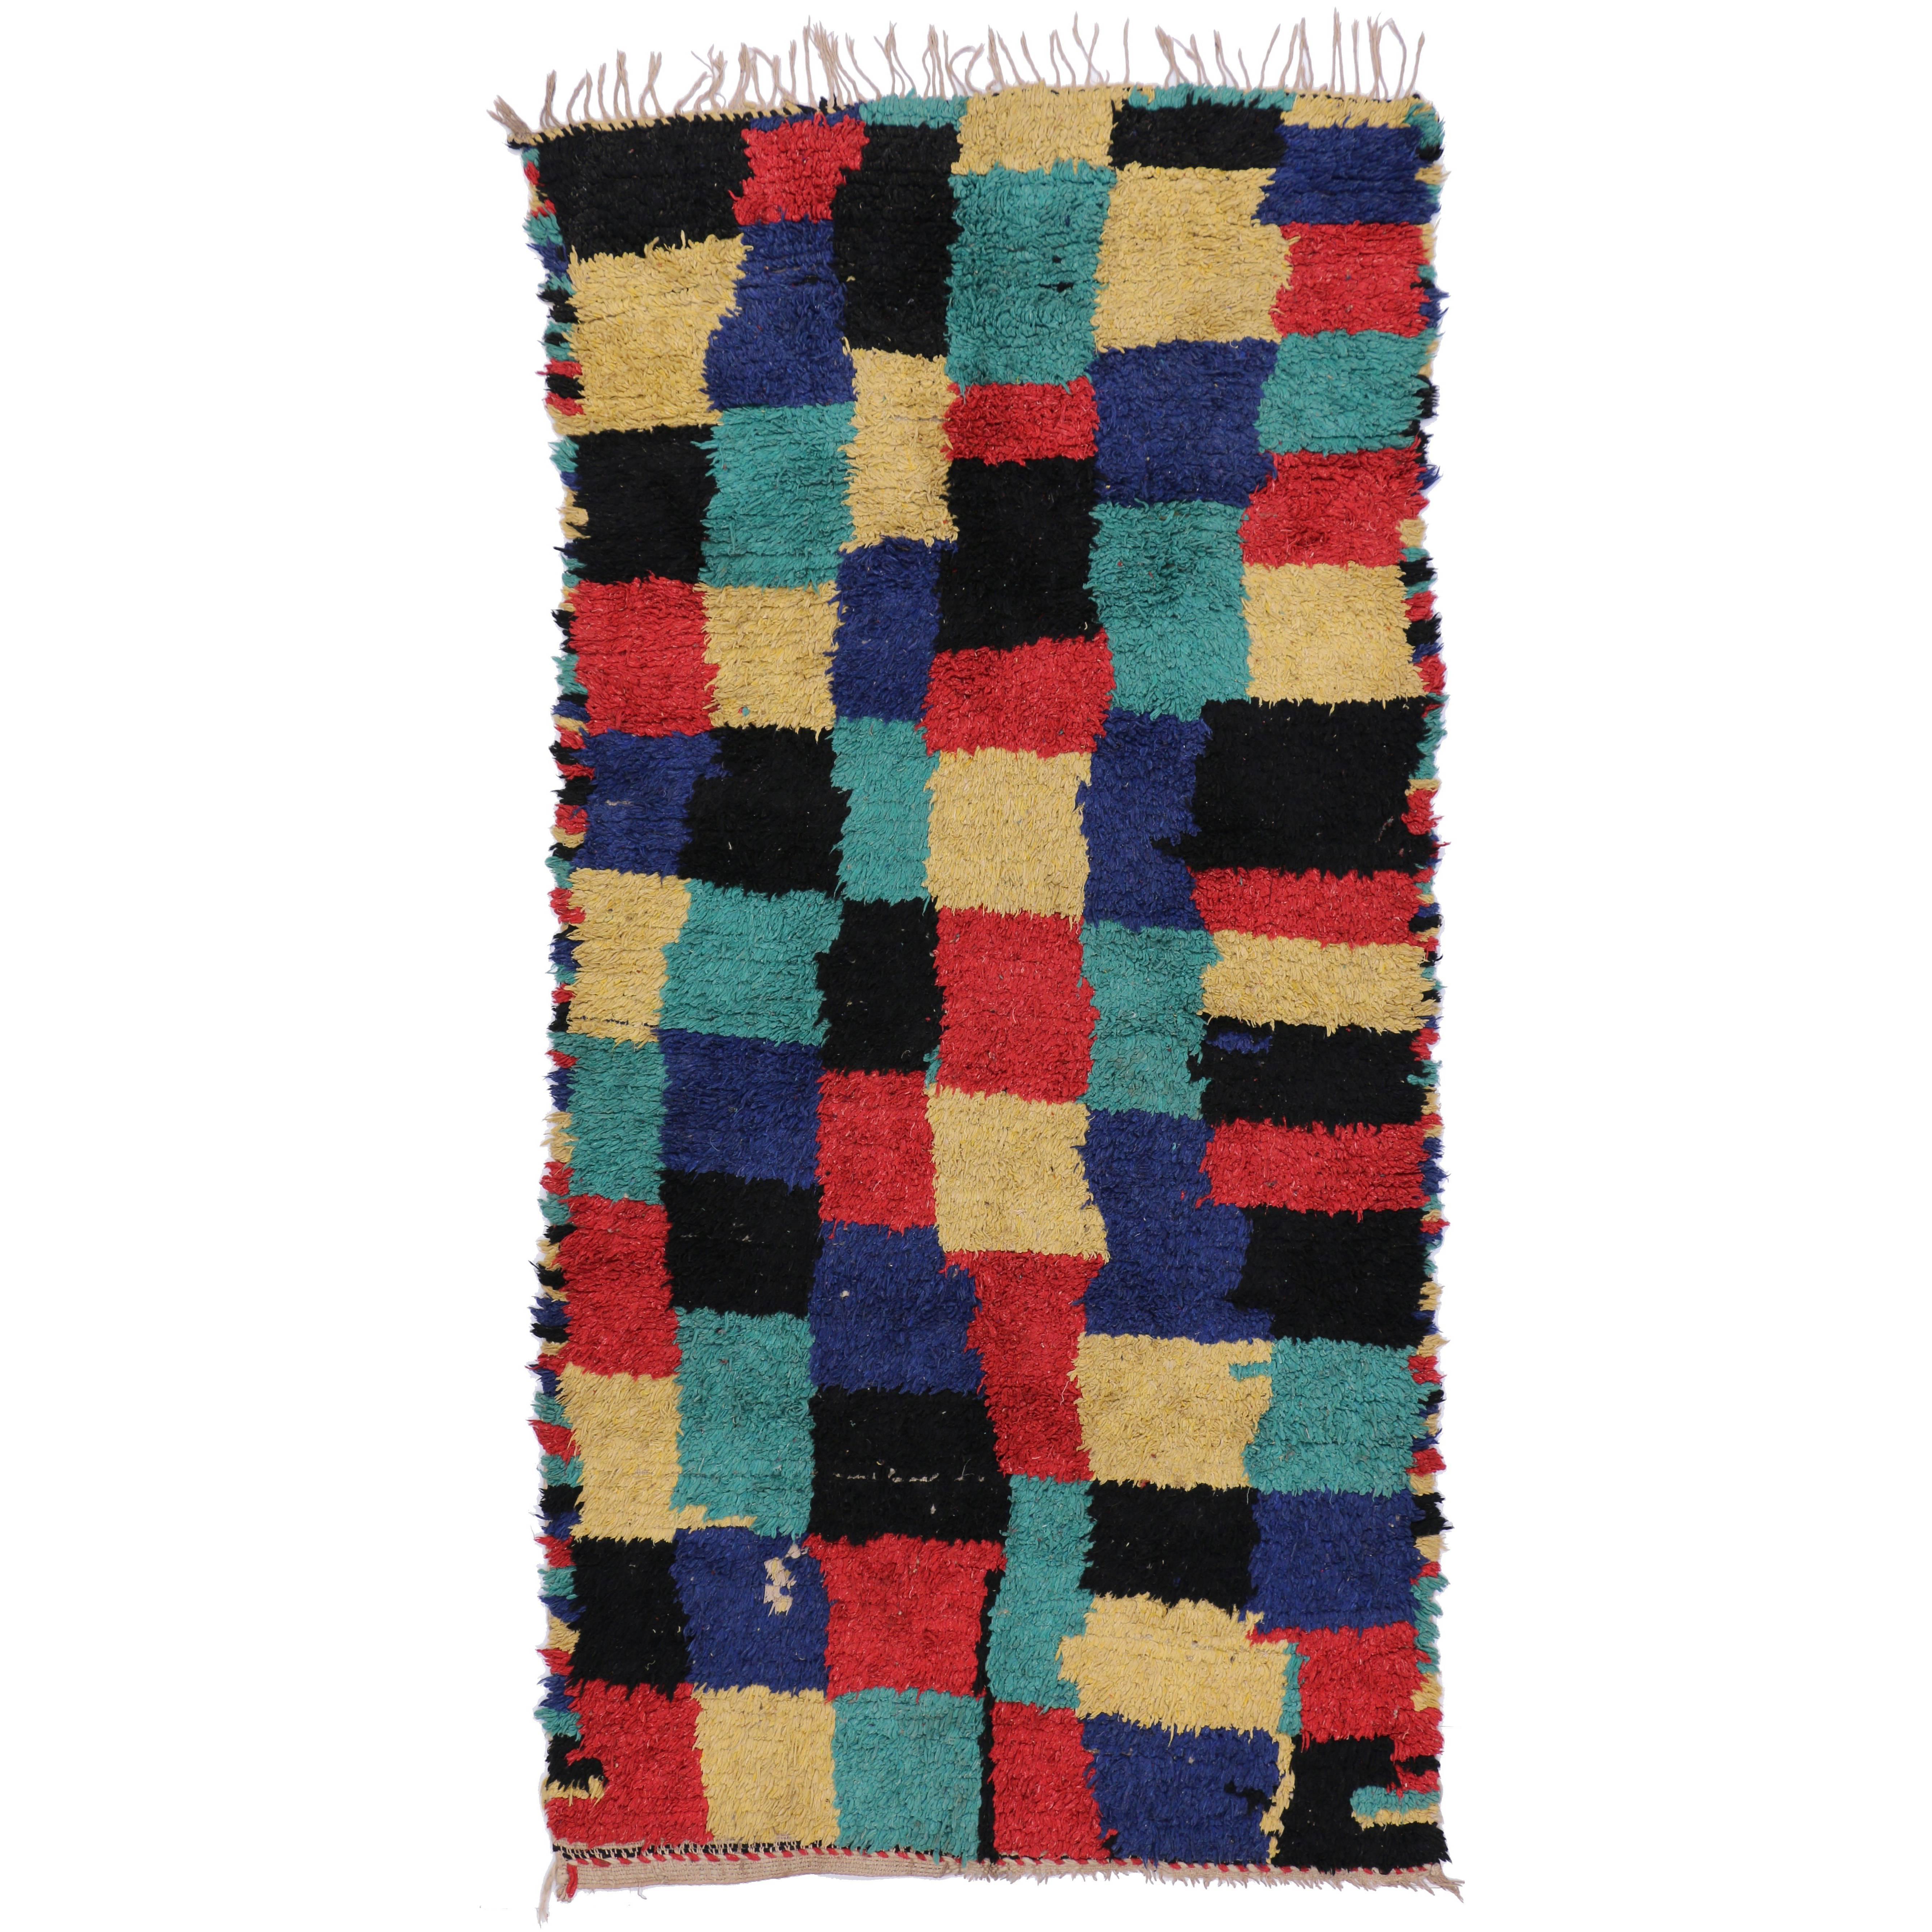 Vintage Berber Moroccan Rug with Contemporary Style, Color Block Rug